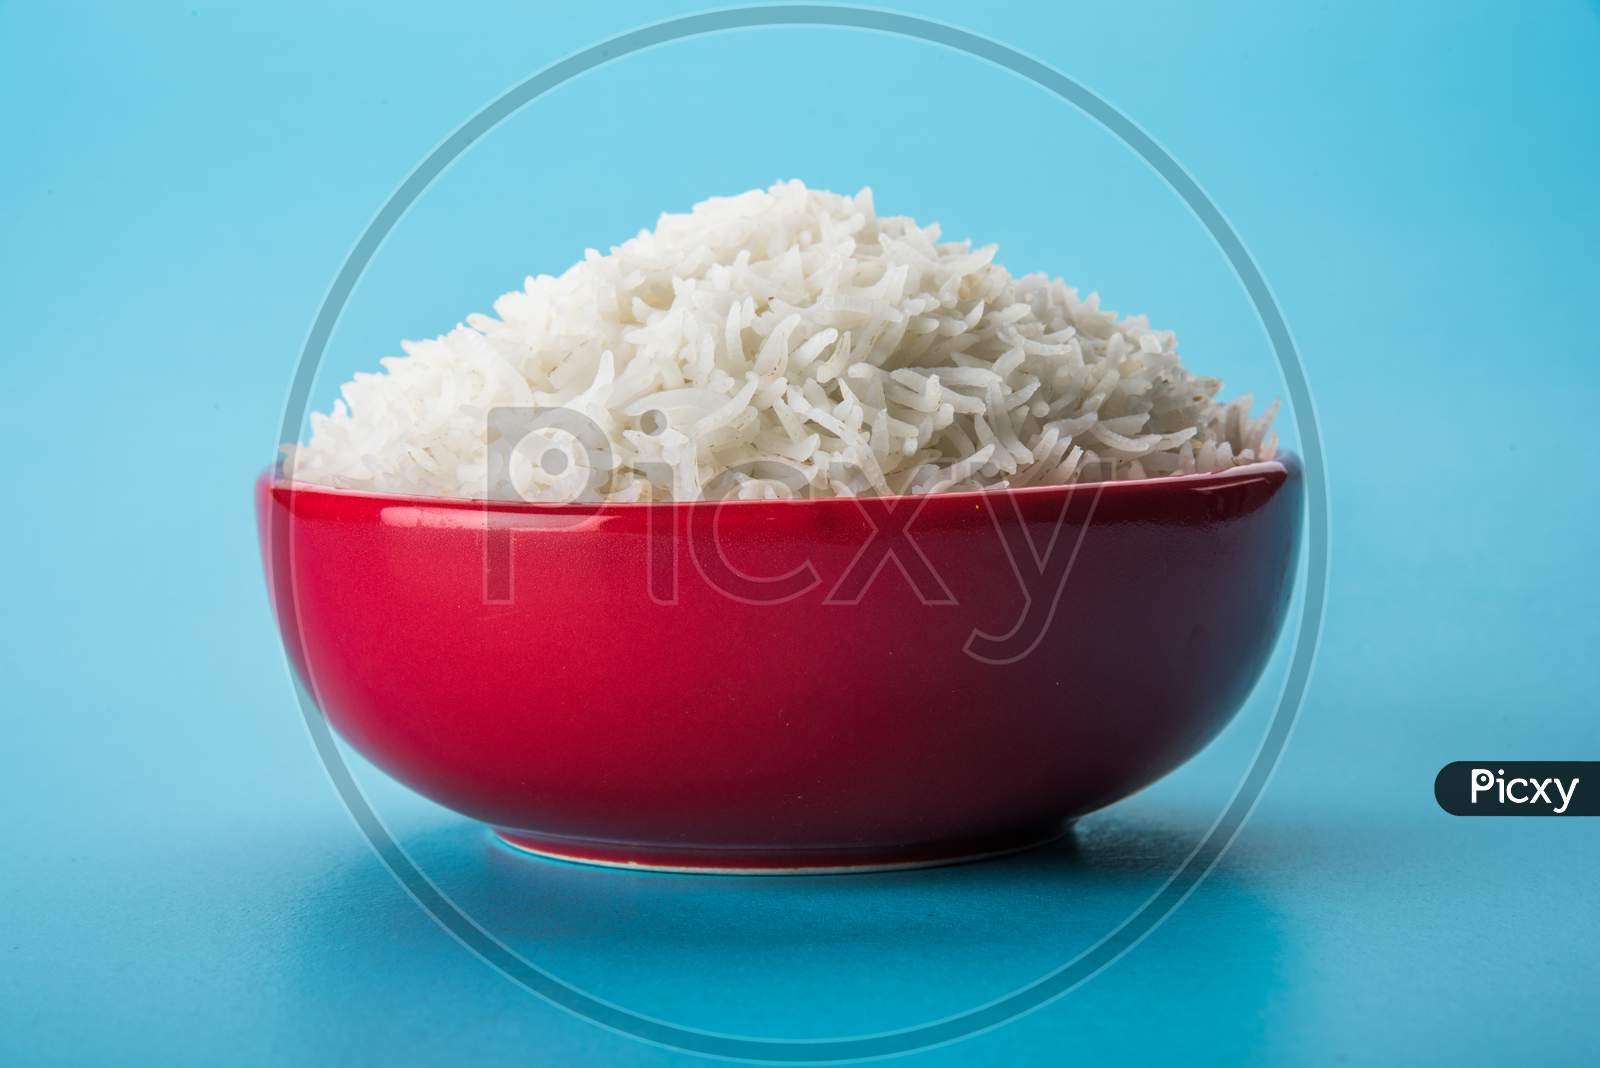 Cooked plain white basmati rice in ceramic bowl